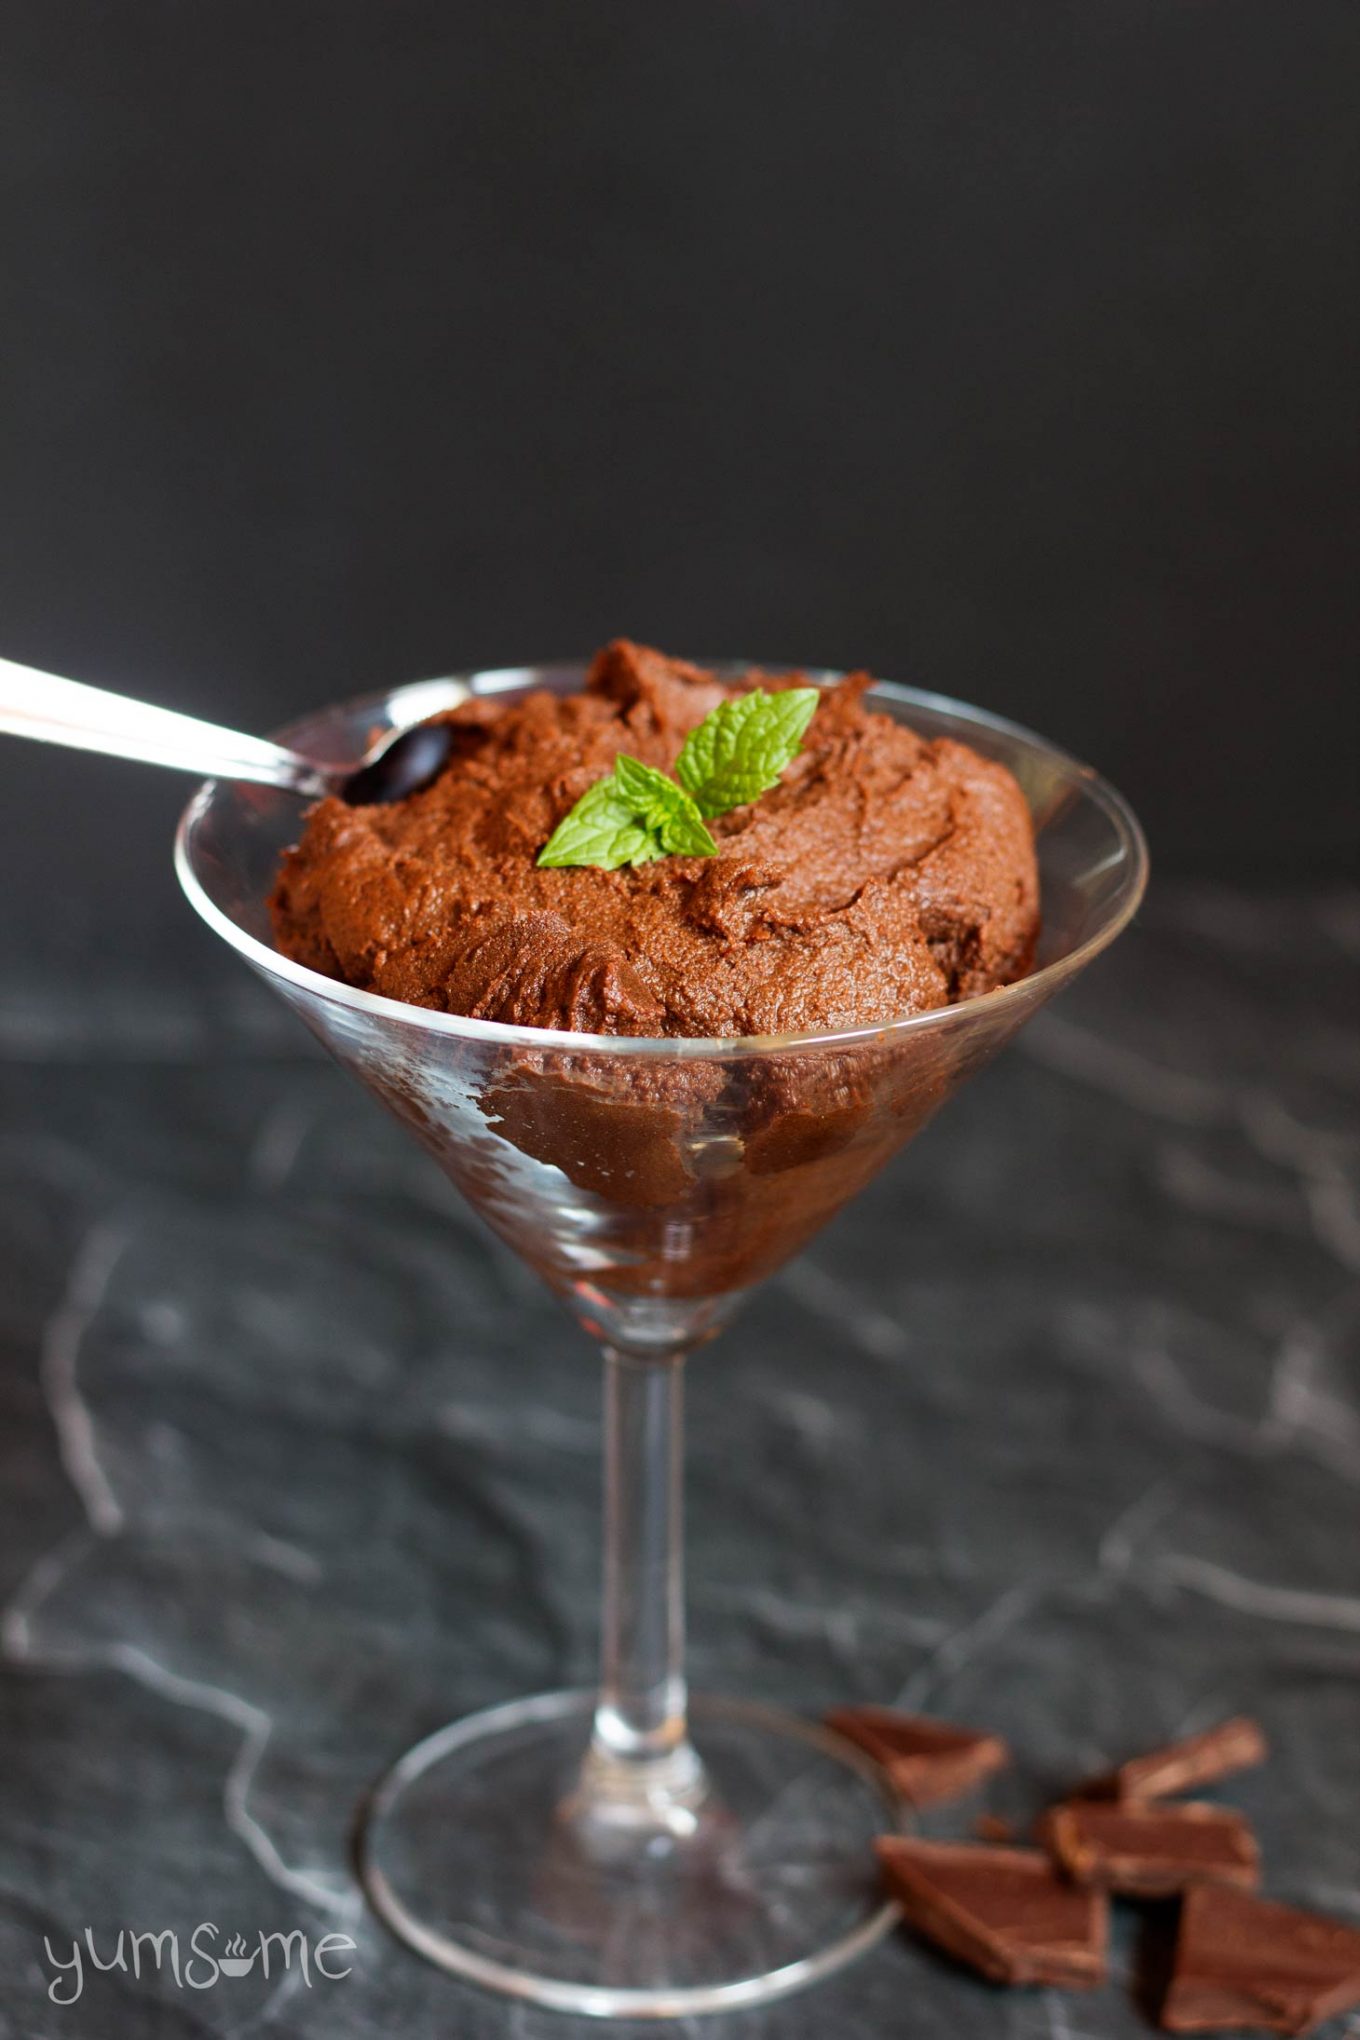 A martini glass containing vegan chocolate pudding.